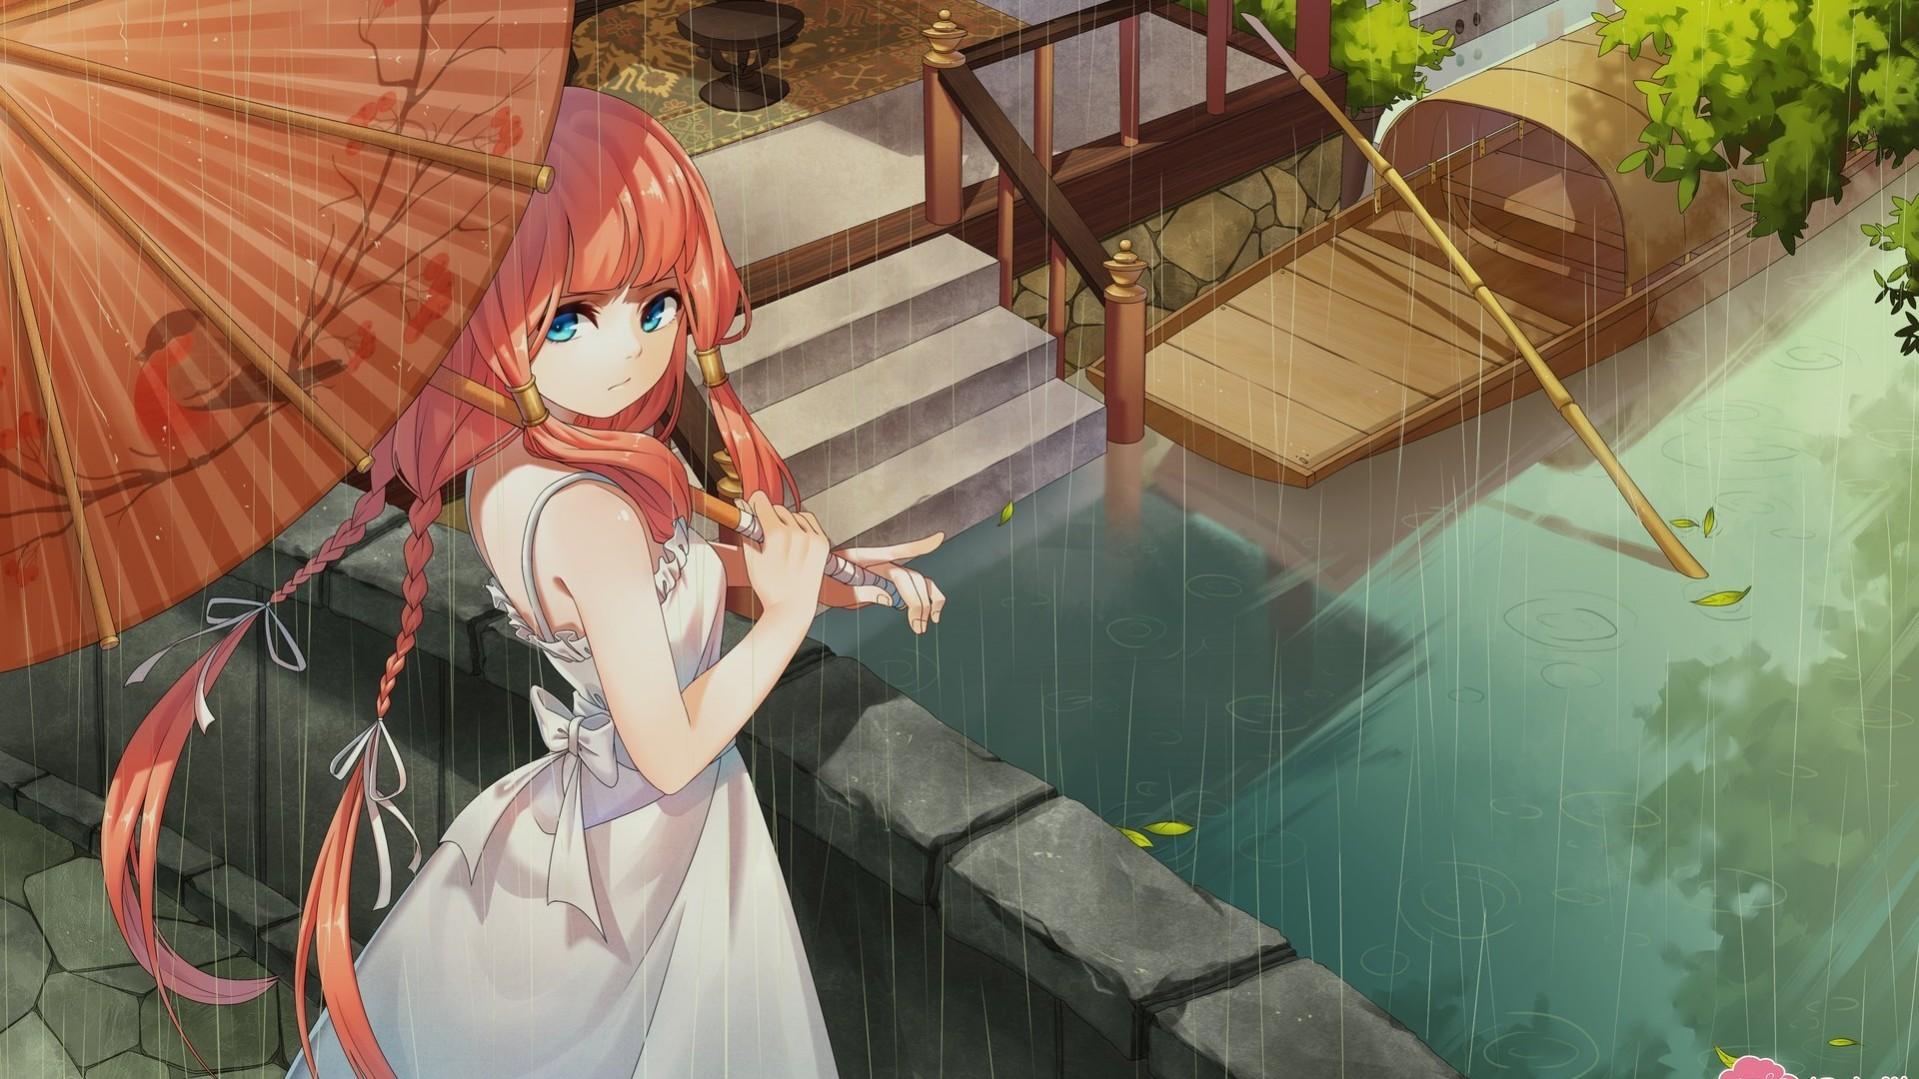 Download 1919x1079 Anime Girl, Umbrella, Rainy Day, Bridge